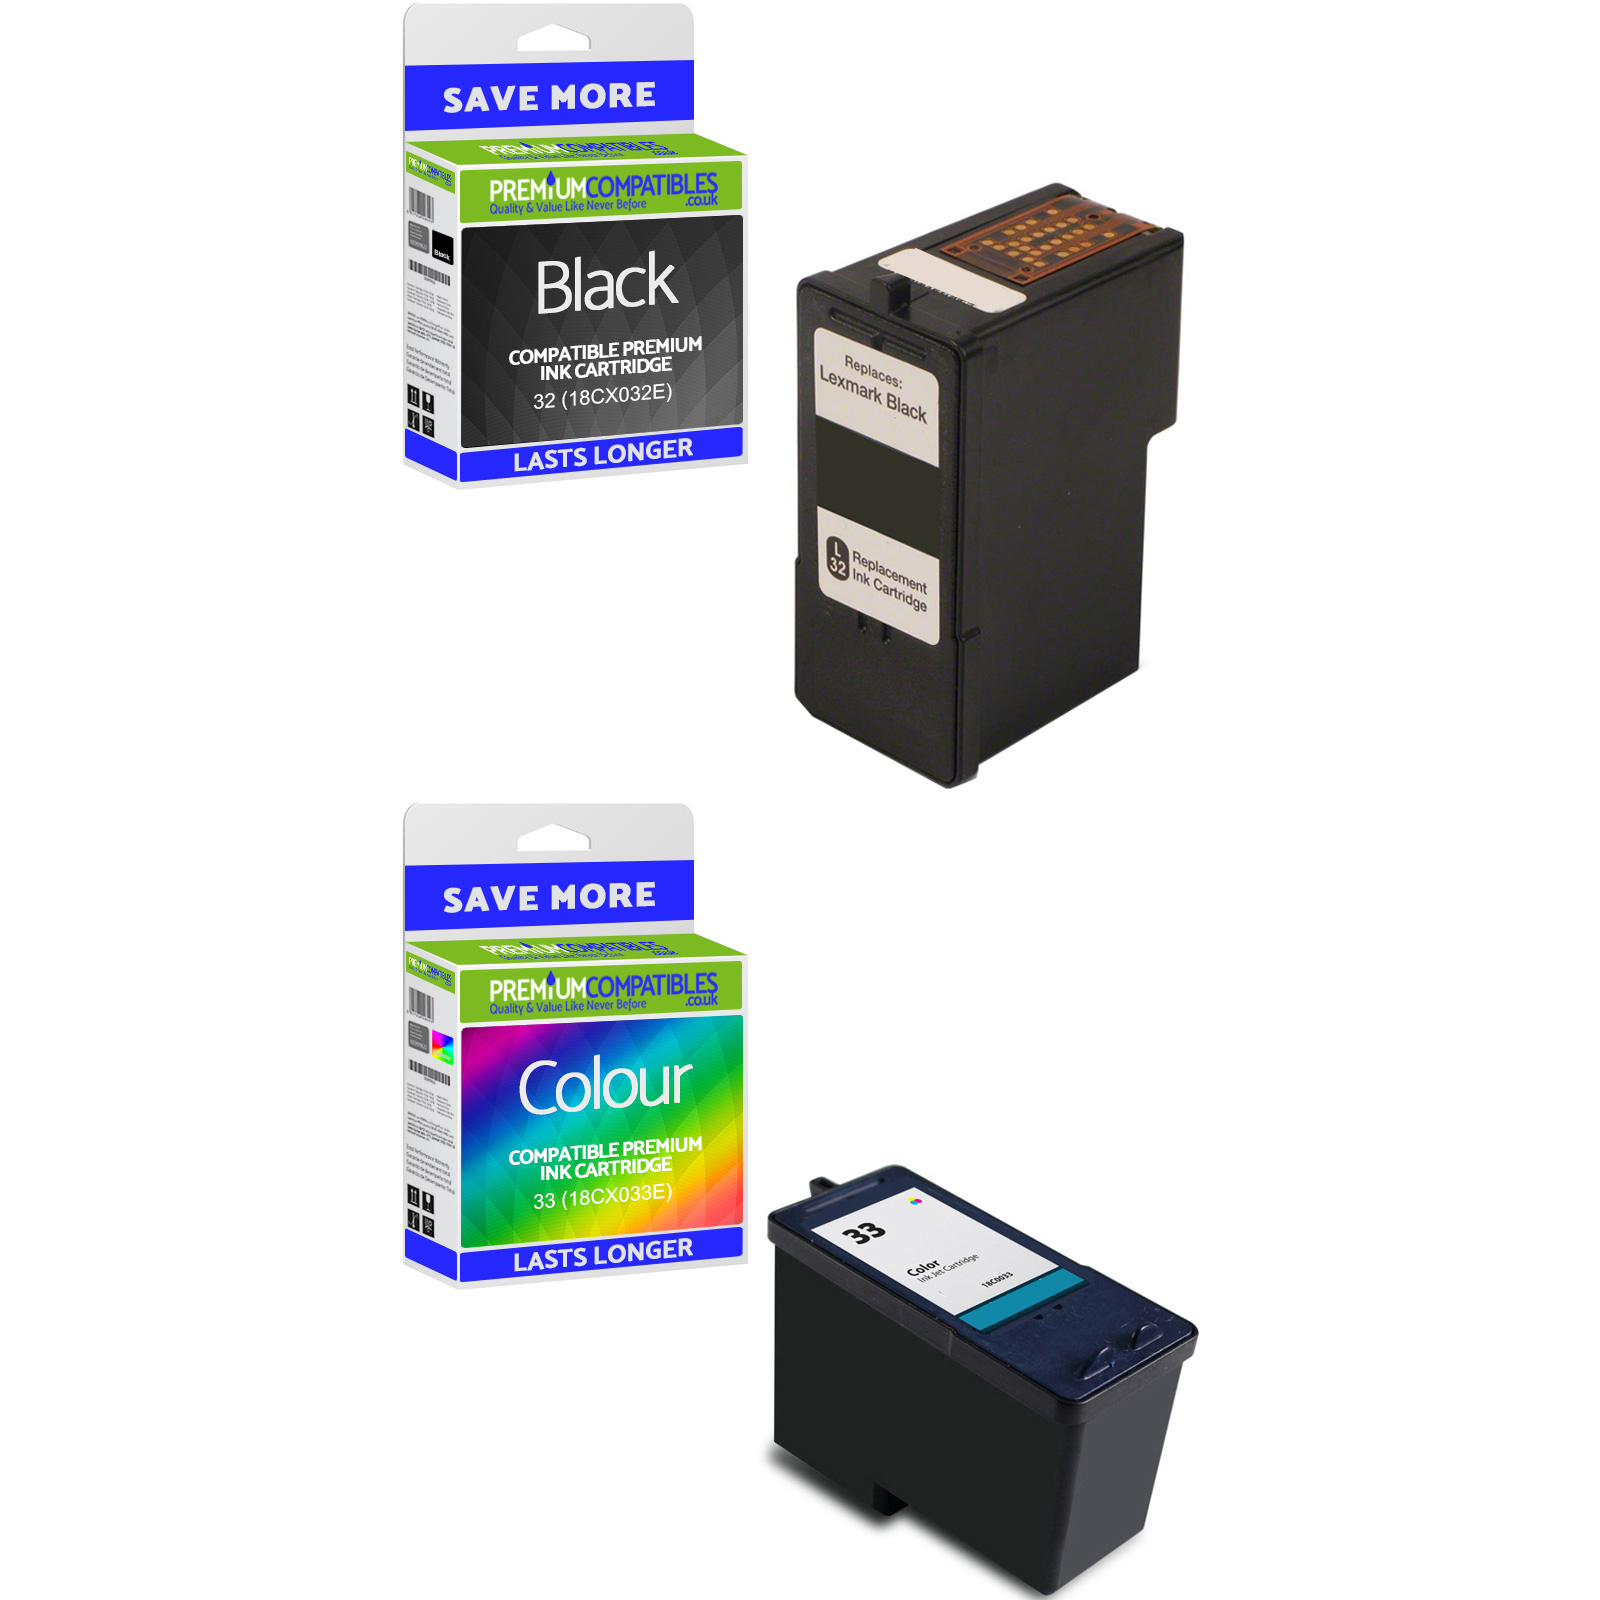 Premium Remanufactured Lexmark 32 / 33 Black & Colour Combo Pack Ink Cartridges (80D2951)